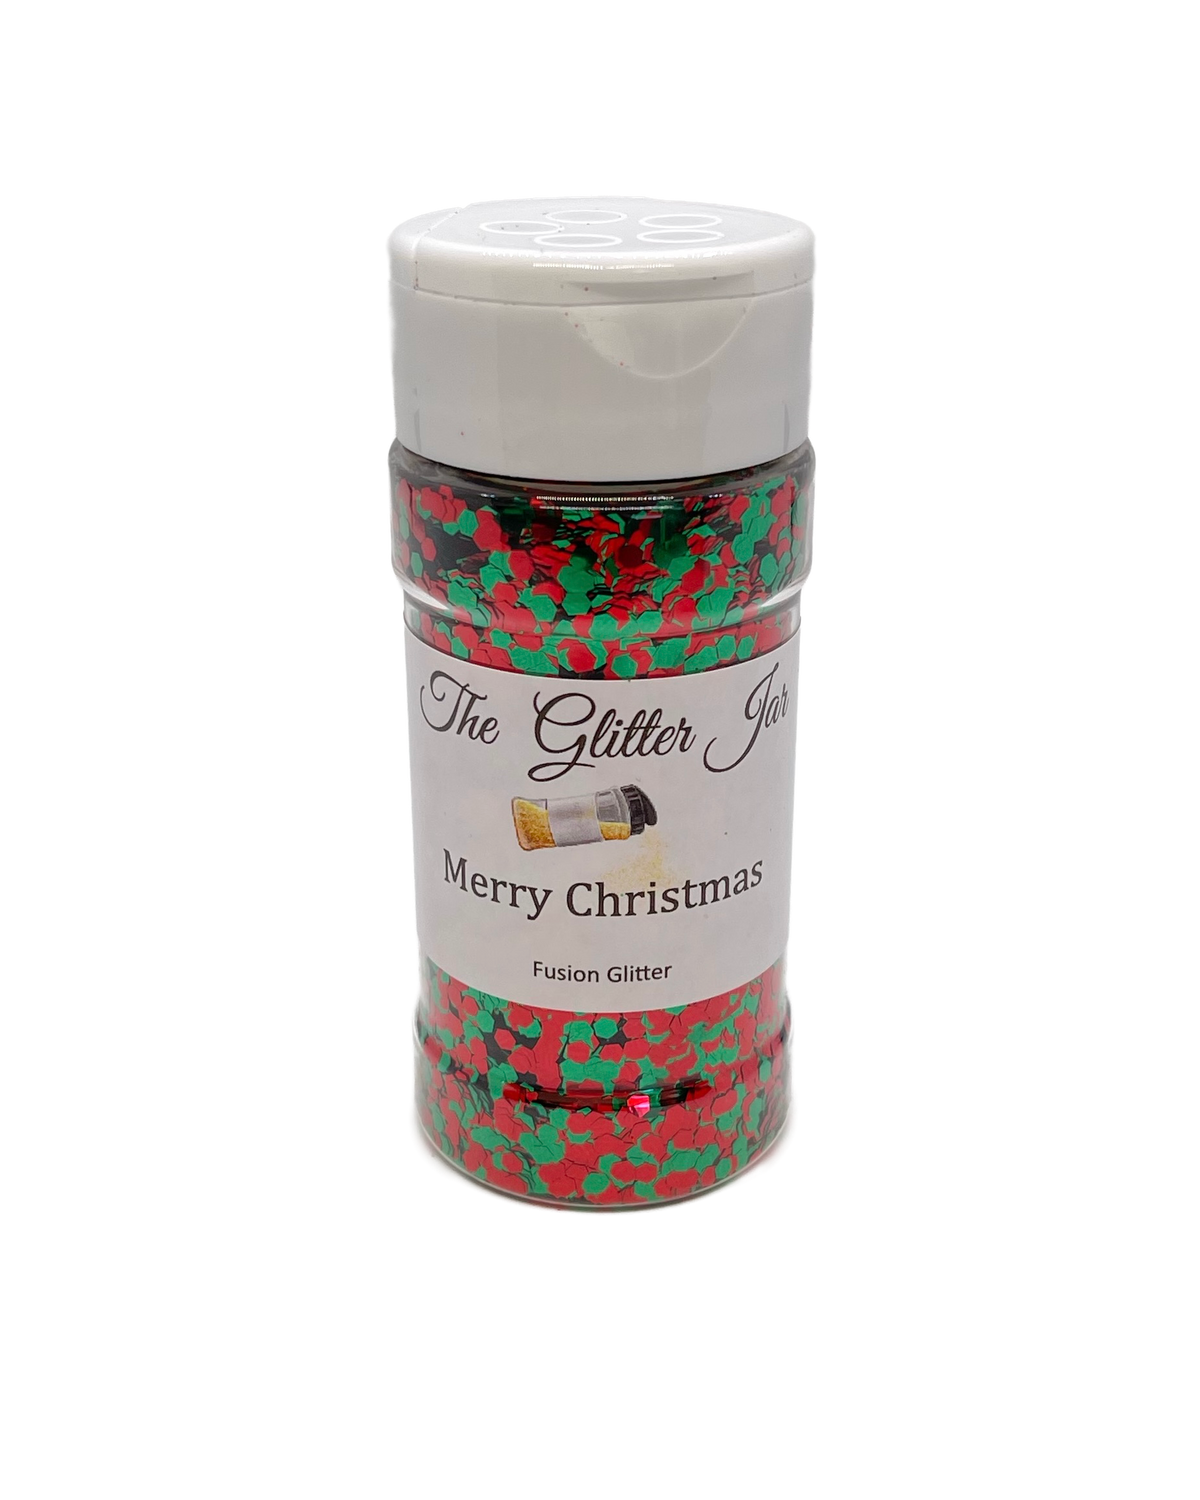 Merry Christmas Fusion Glitter The Glitter Jar